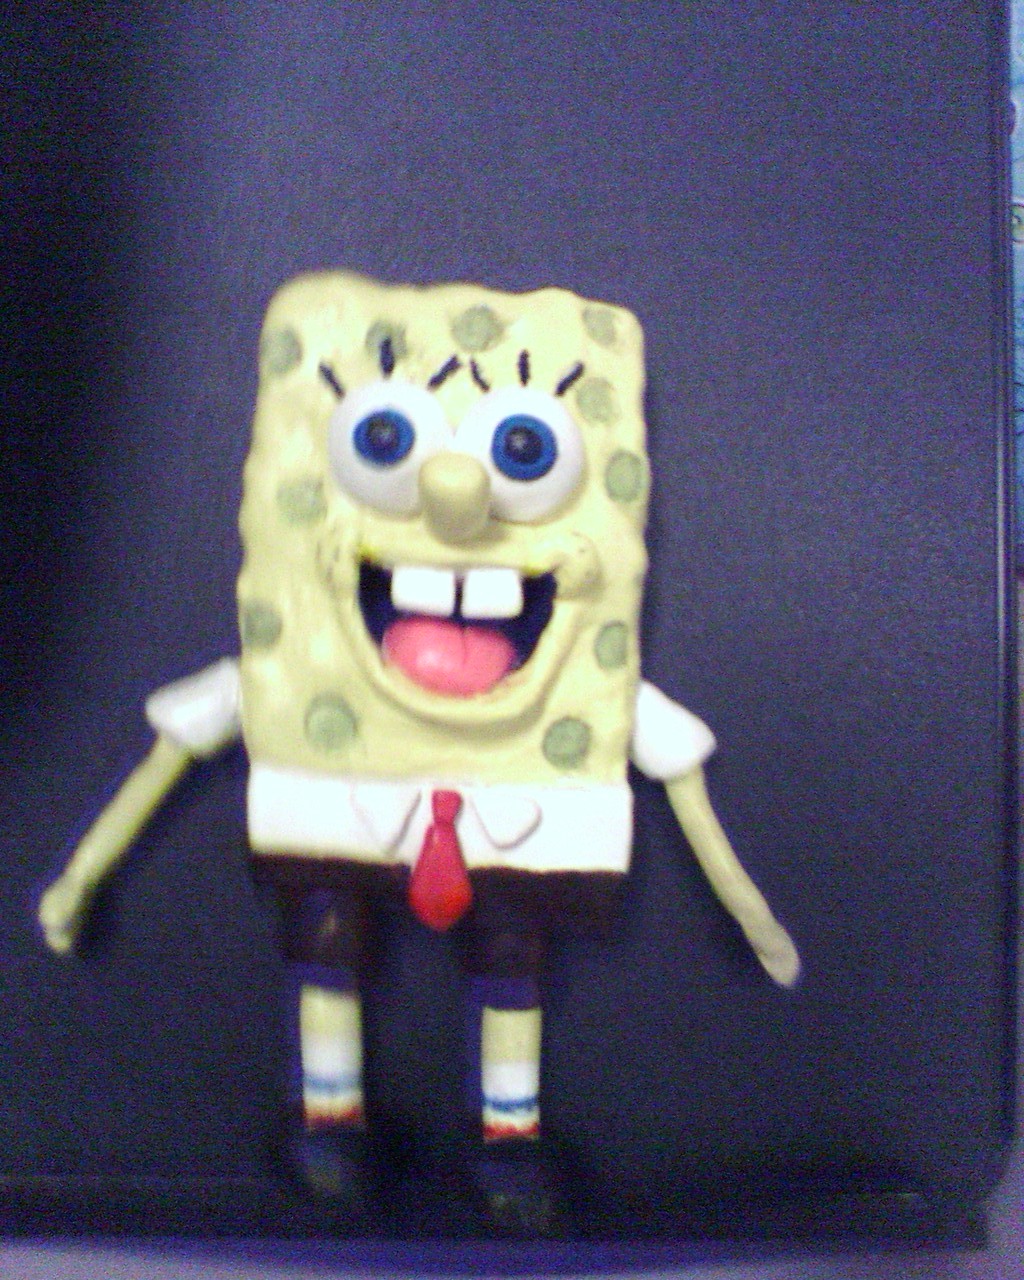 Spongebob Sculpture by SNakano